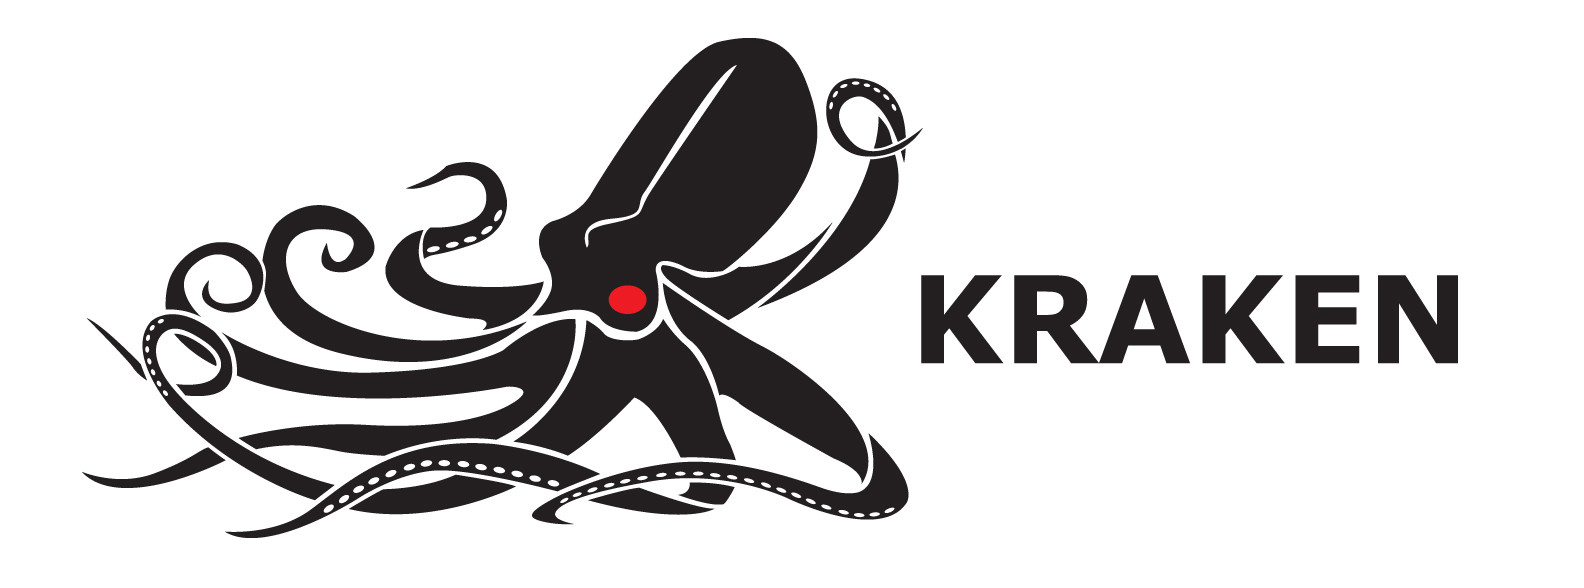 MEMBER NEWS: Kraken Robotics awarded $1 million contract to survey buried subsea pipeline